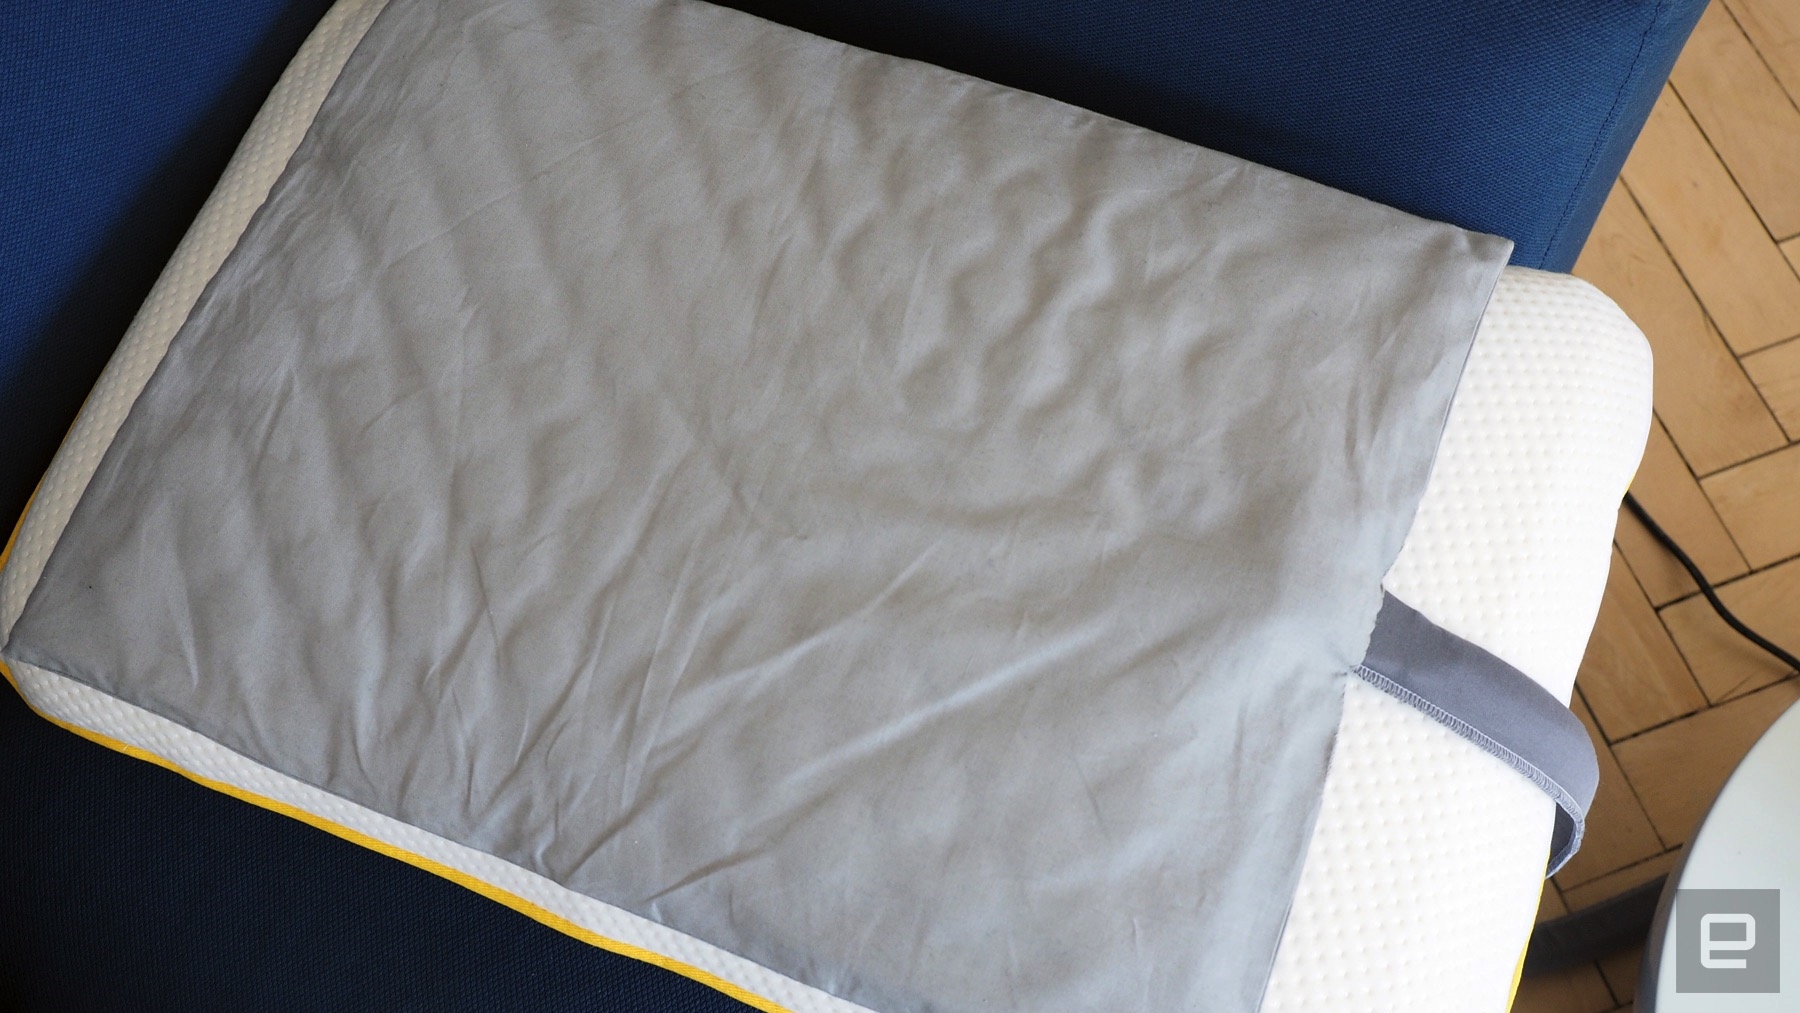 The always-cold pillow is no longer a fever dream | DeviceDaily.com